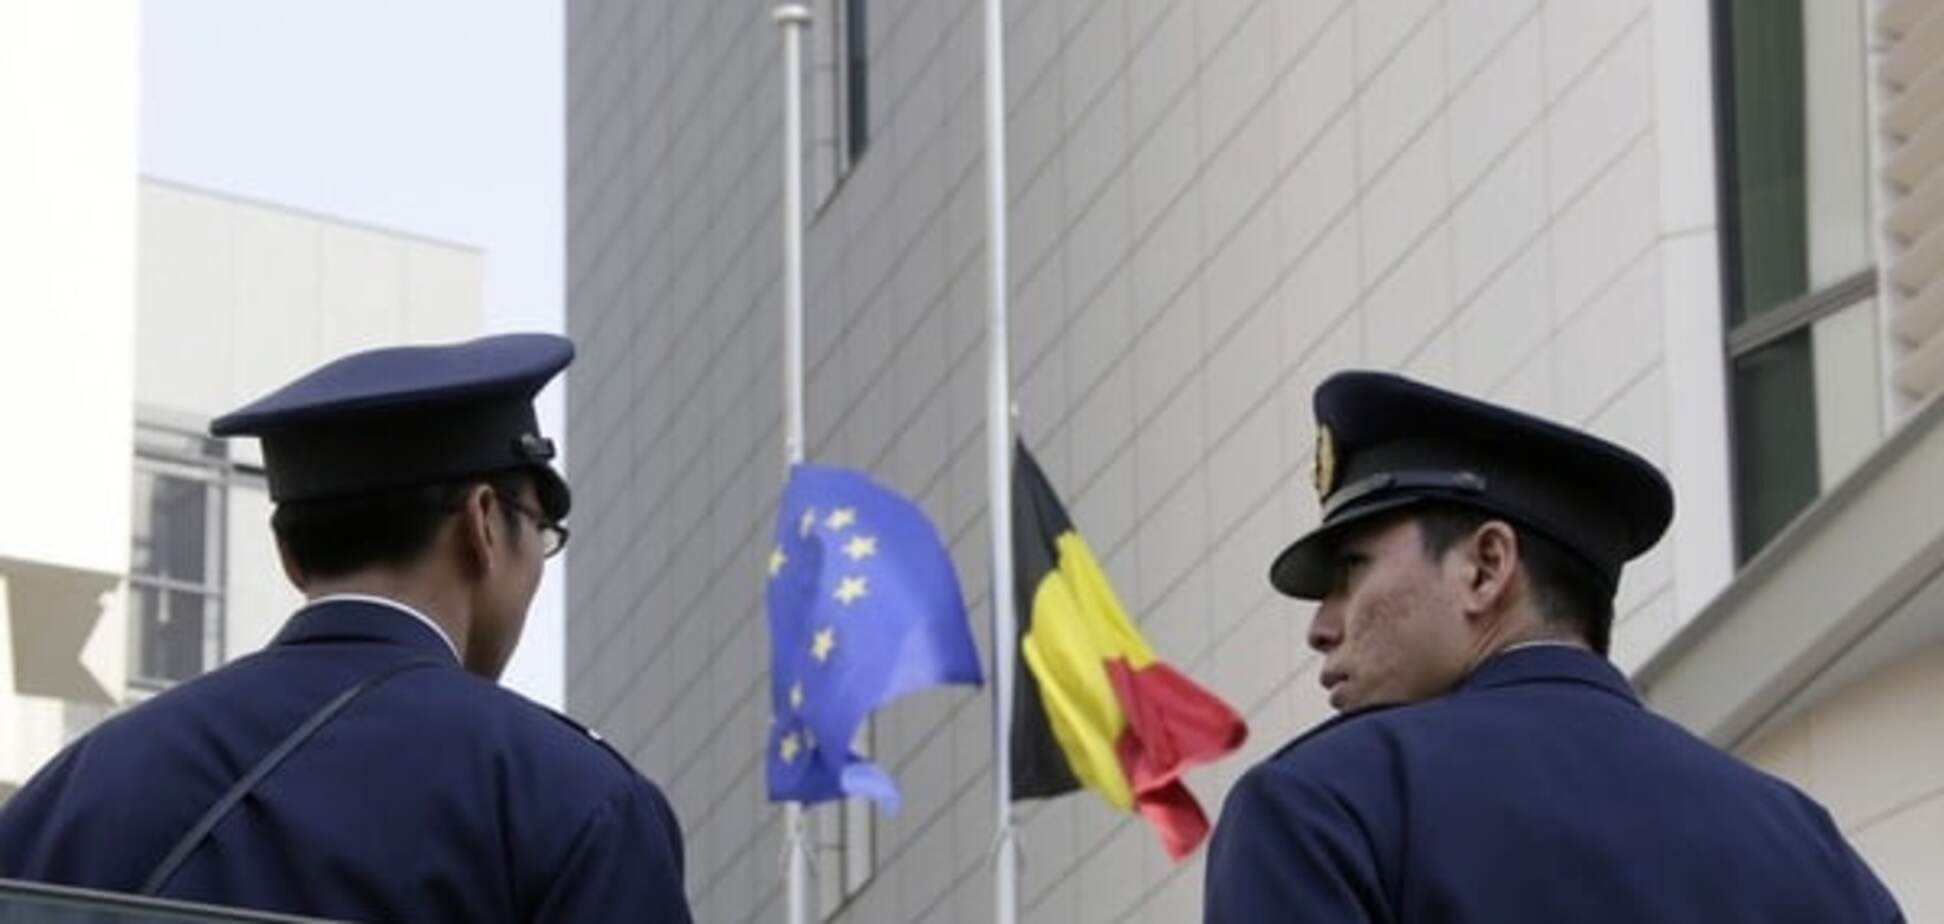 Теракти в Брюсселі - катастрофічний провал спецслужб Еросоюза - екс-глава ЦРУ